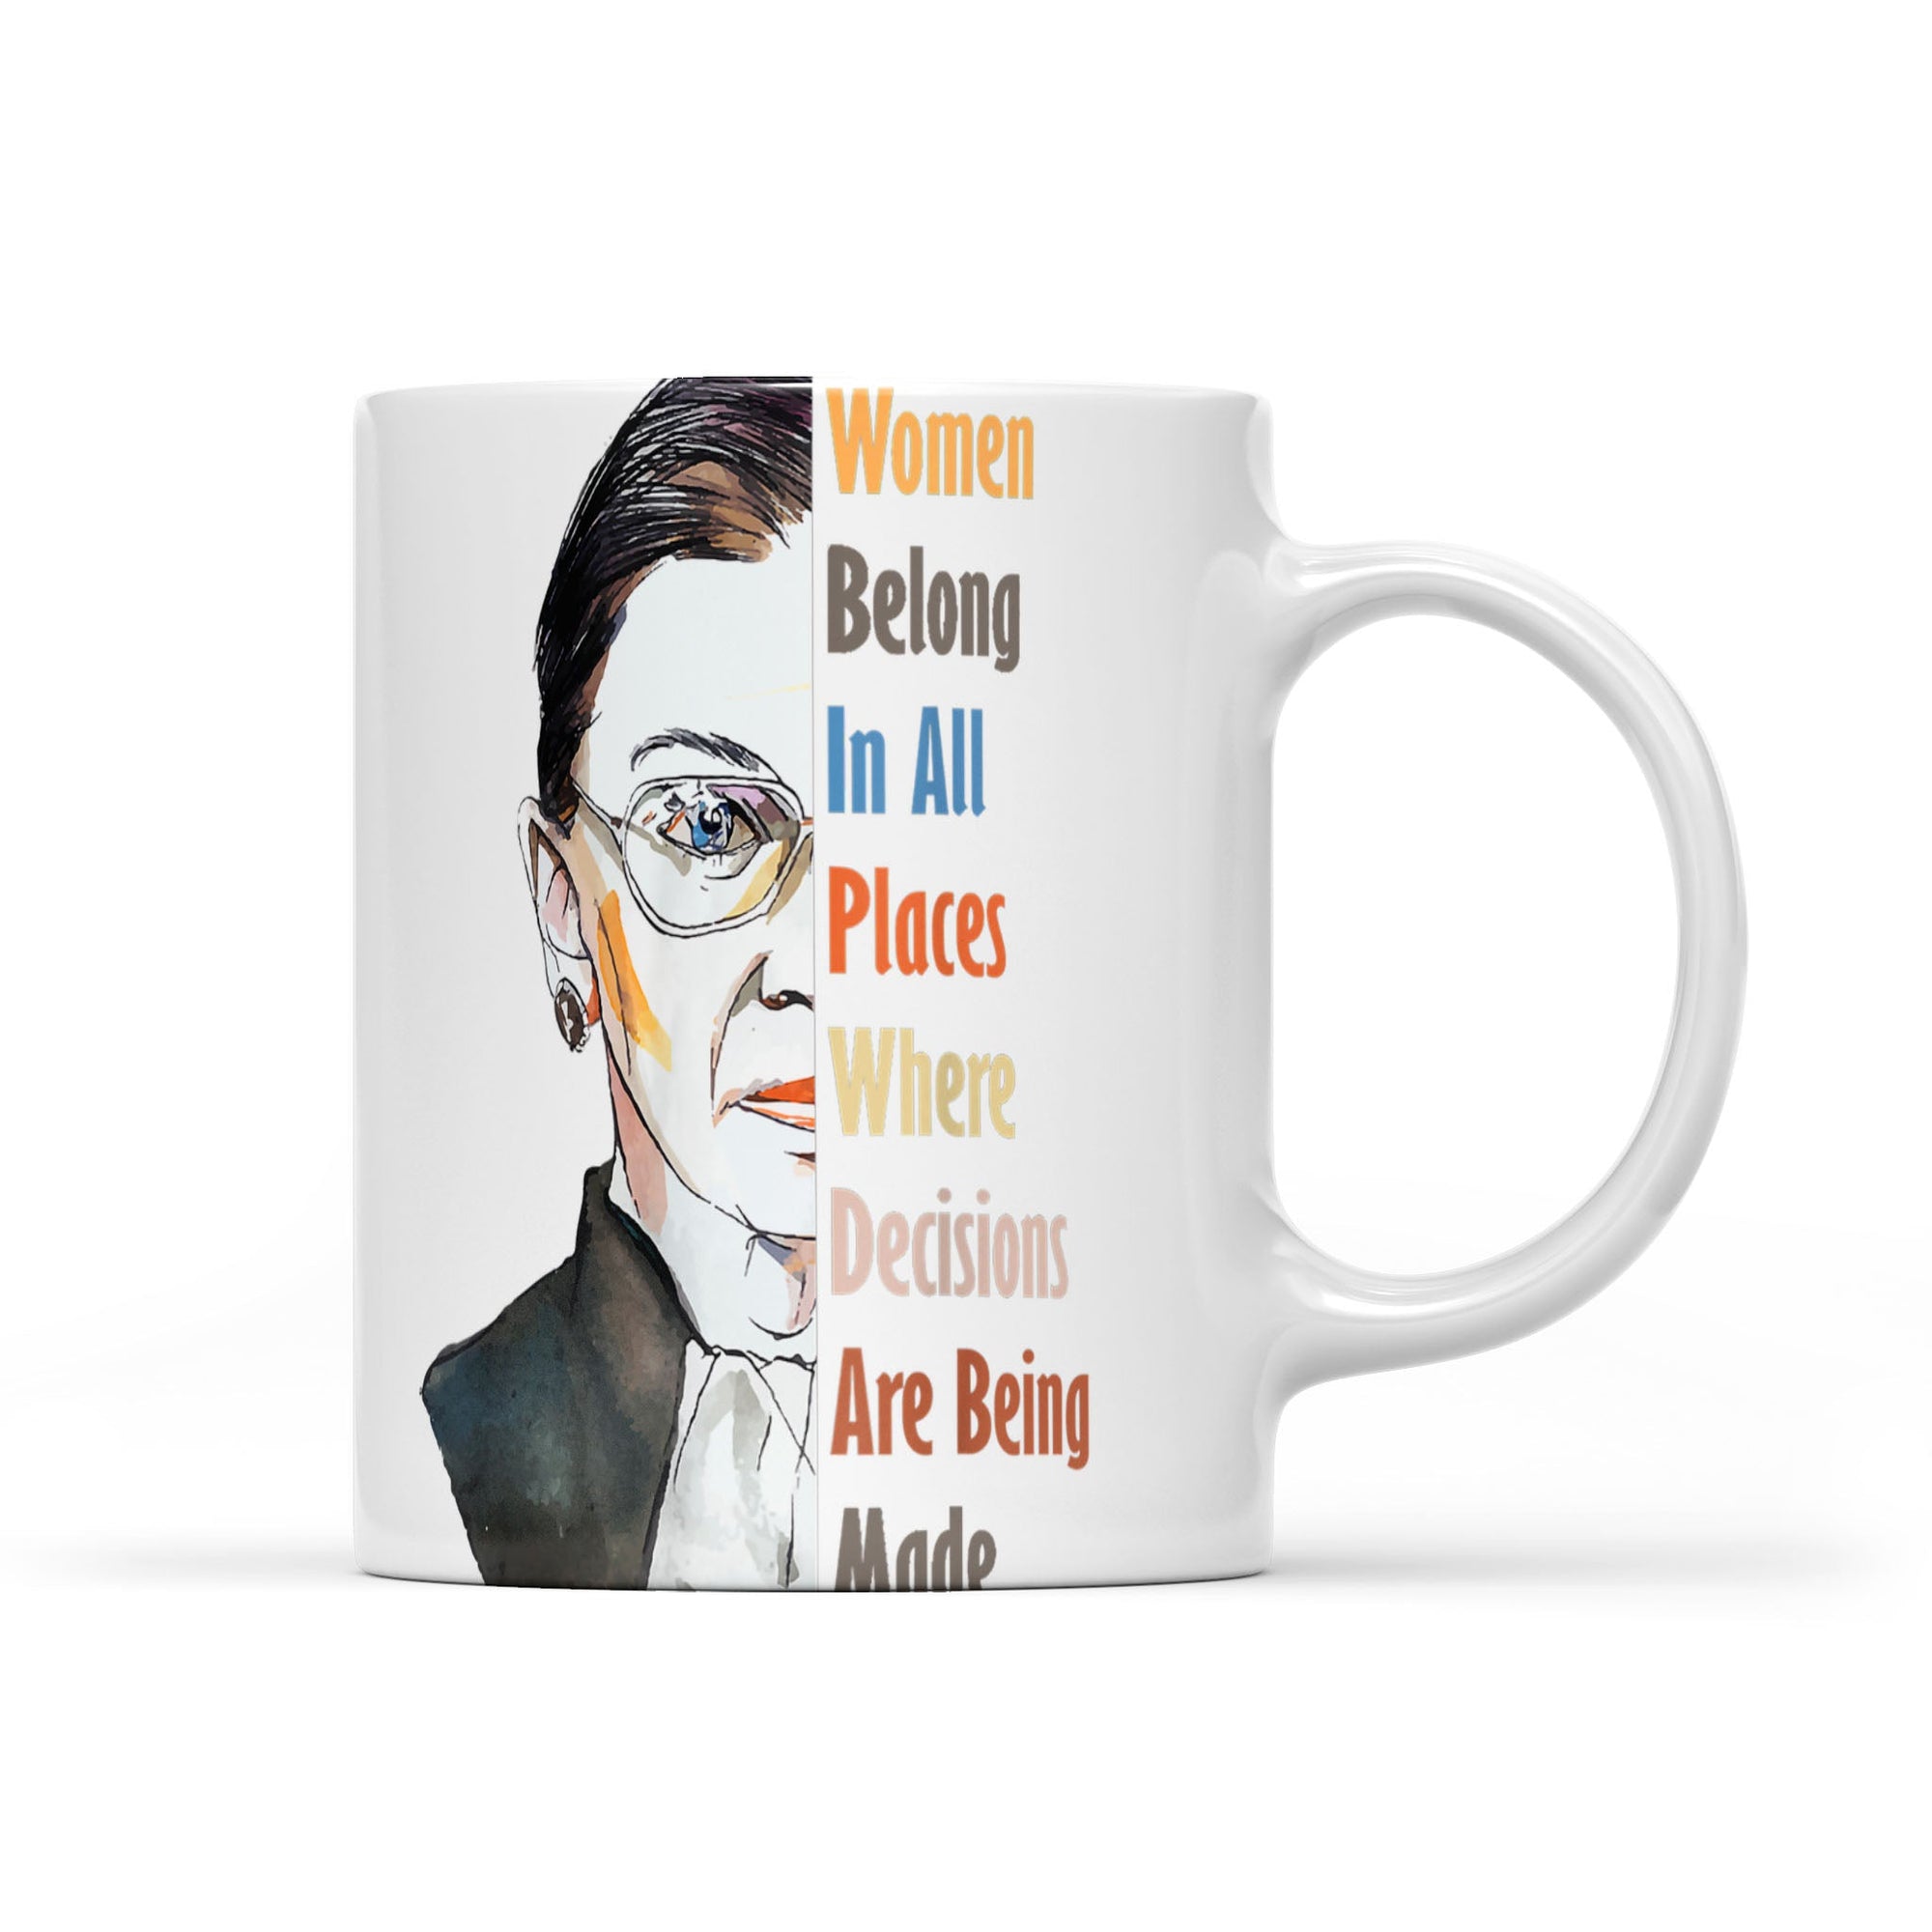 Ruth Bader Ginsburg RBG Feminist Women Belong In All Places - White Edge-to-Edge Mug